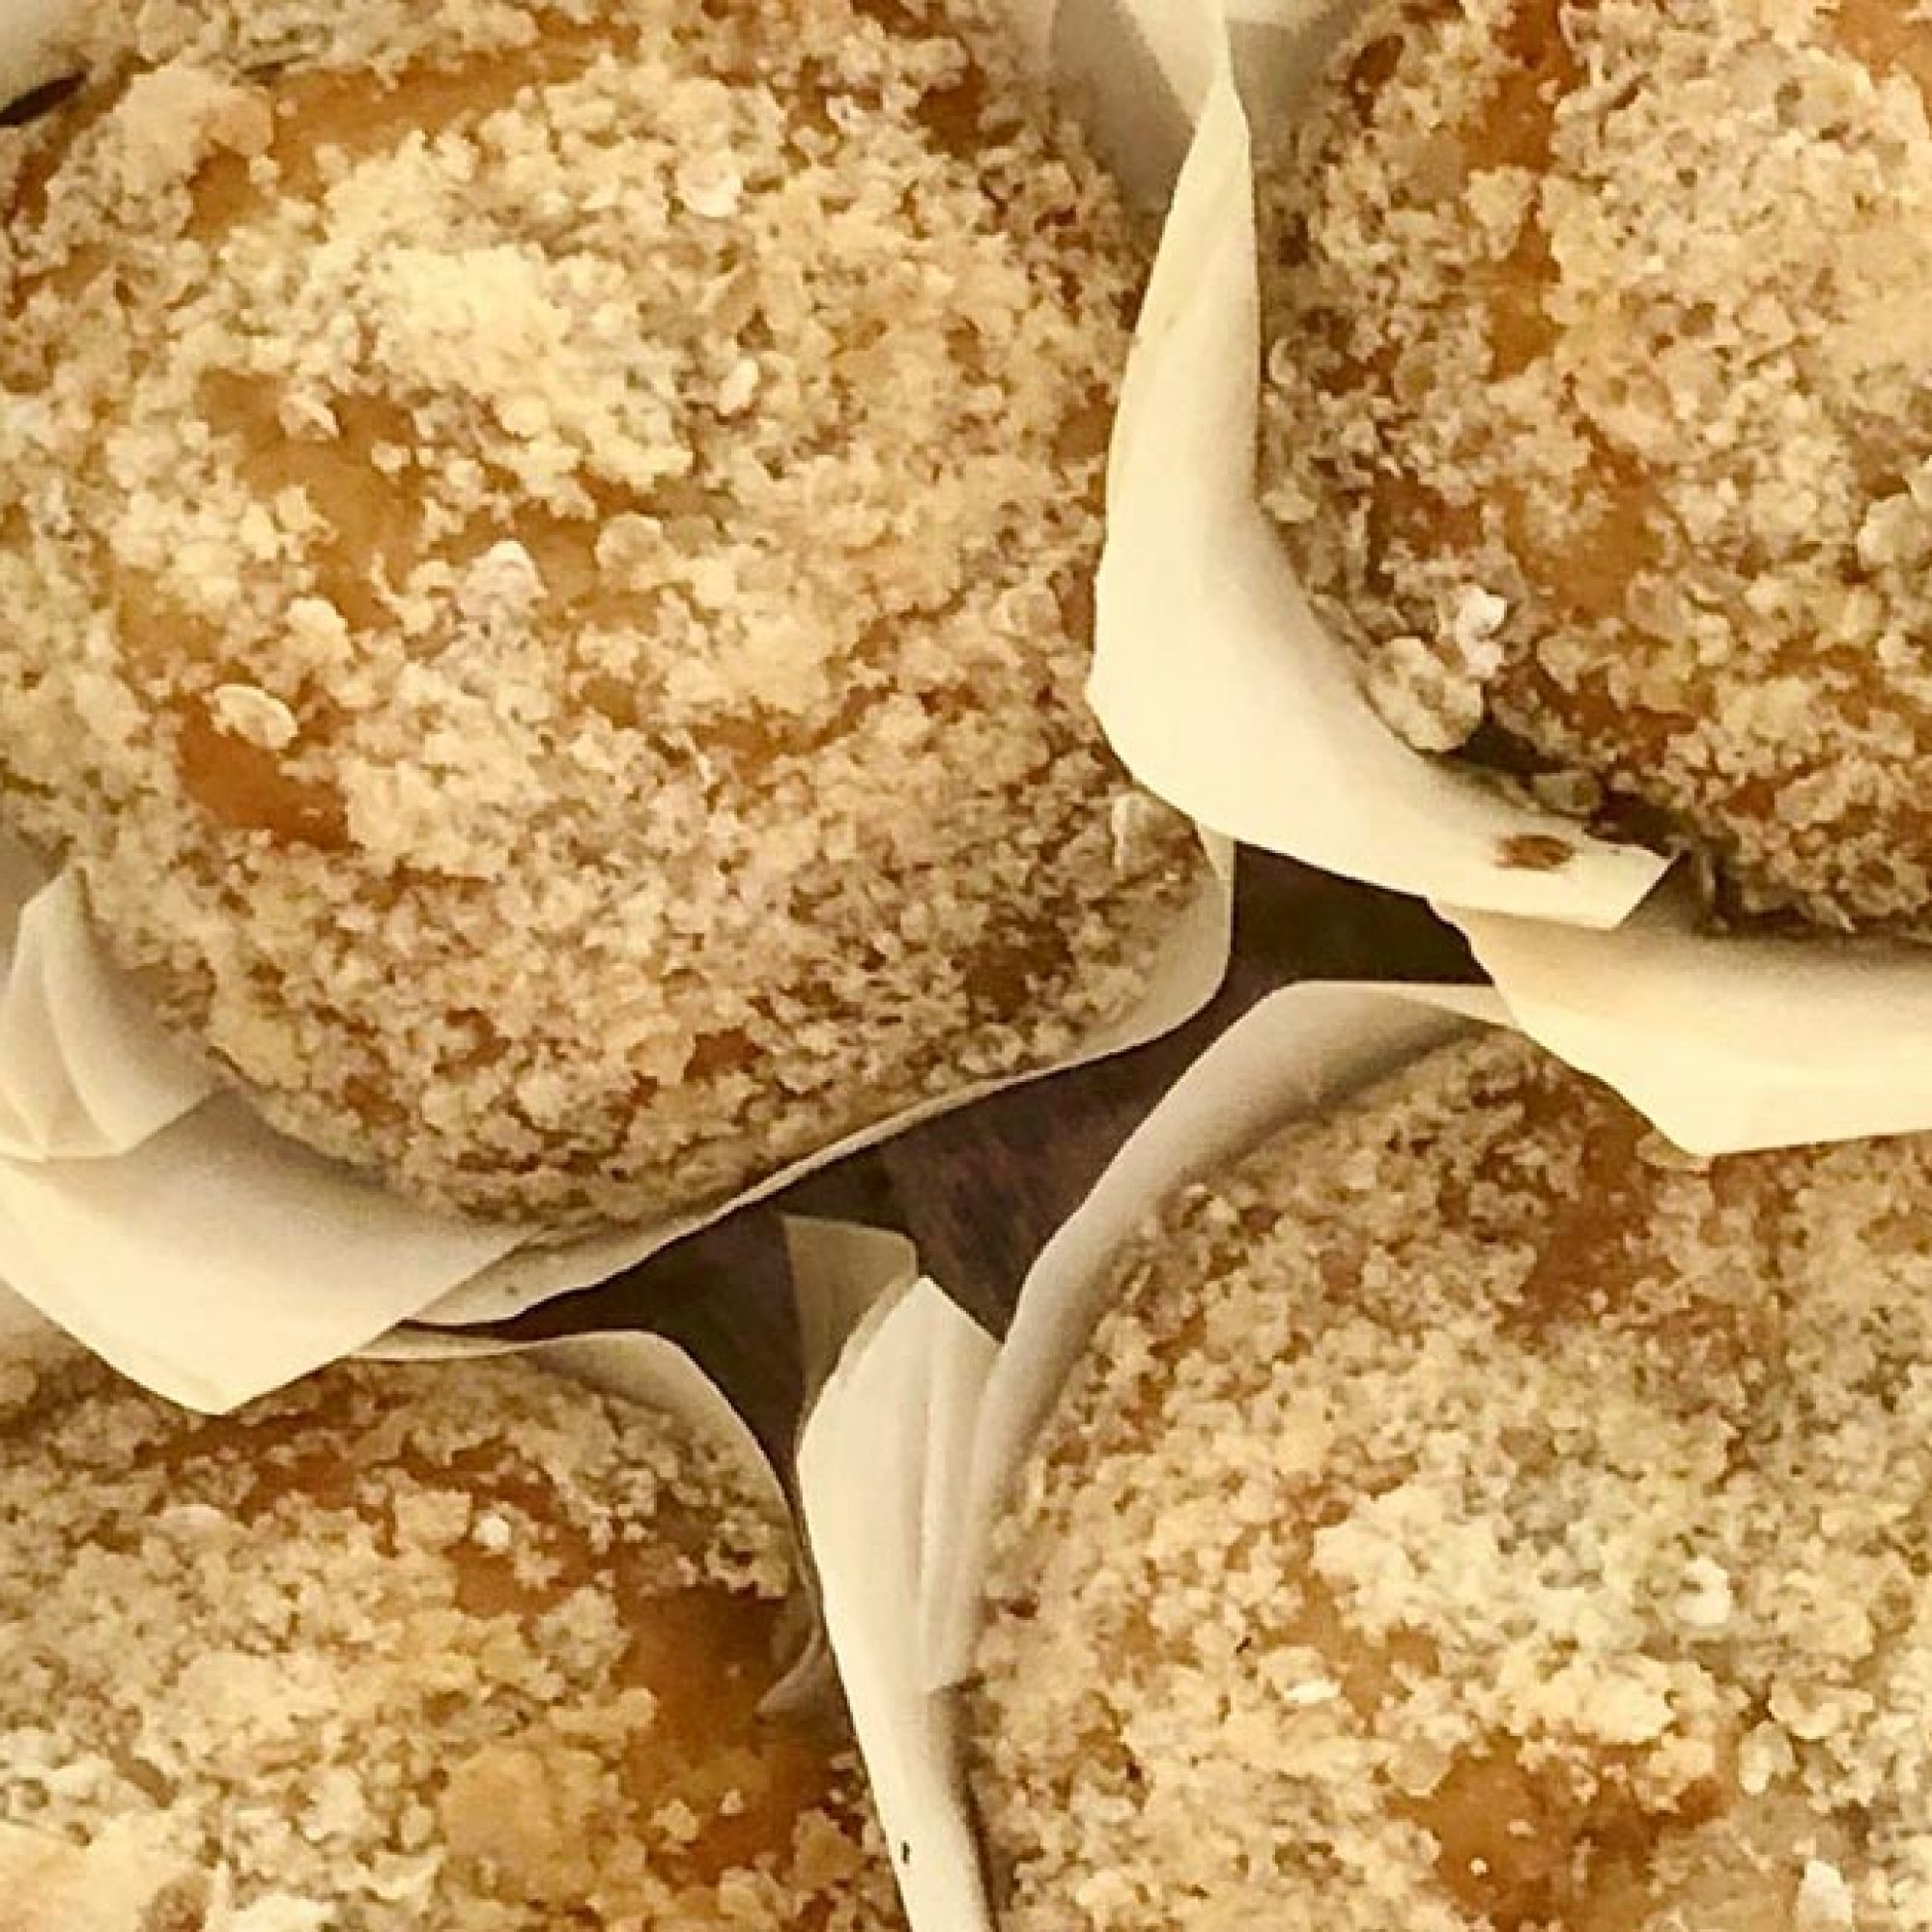 Macadamia and Apple crumble muffins recipe